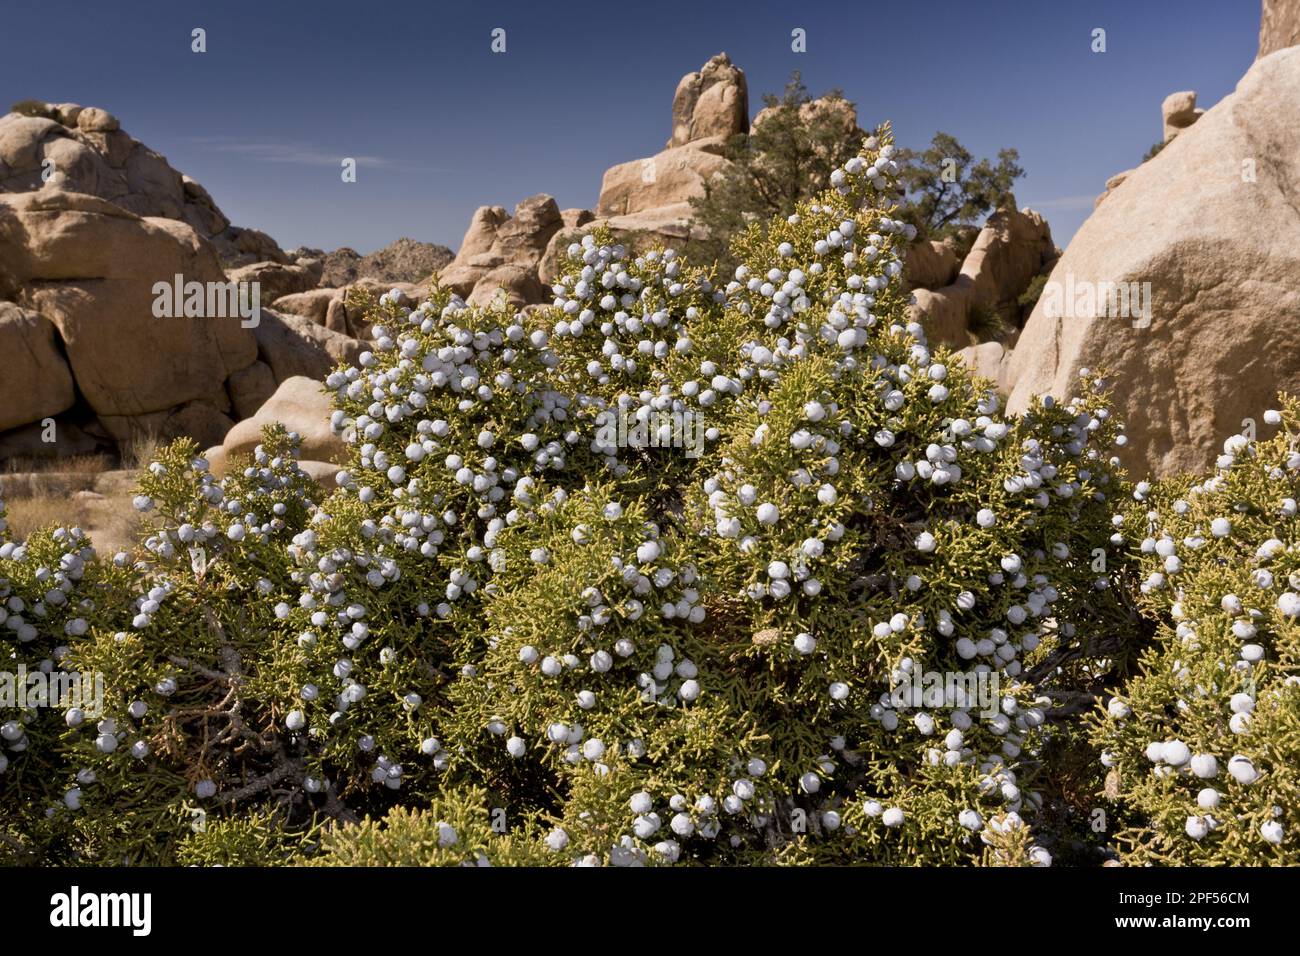 California juniper (Juniperus californica) in fruit, growing in the desert, Joshua Tree N. P. Mojave Desert, utricularia ochroleuca (U.) (U.) S. A Stock Photo